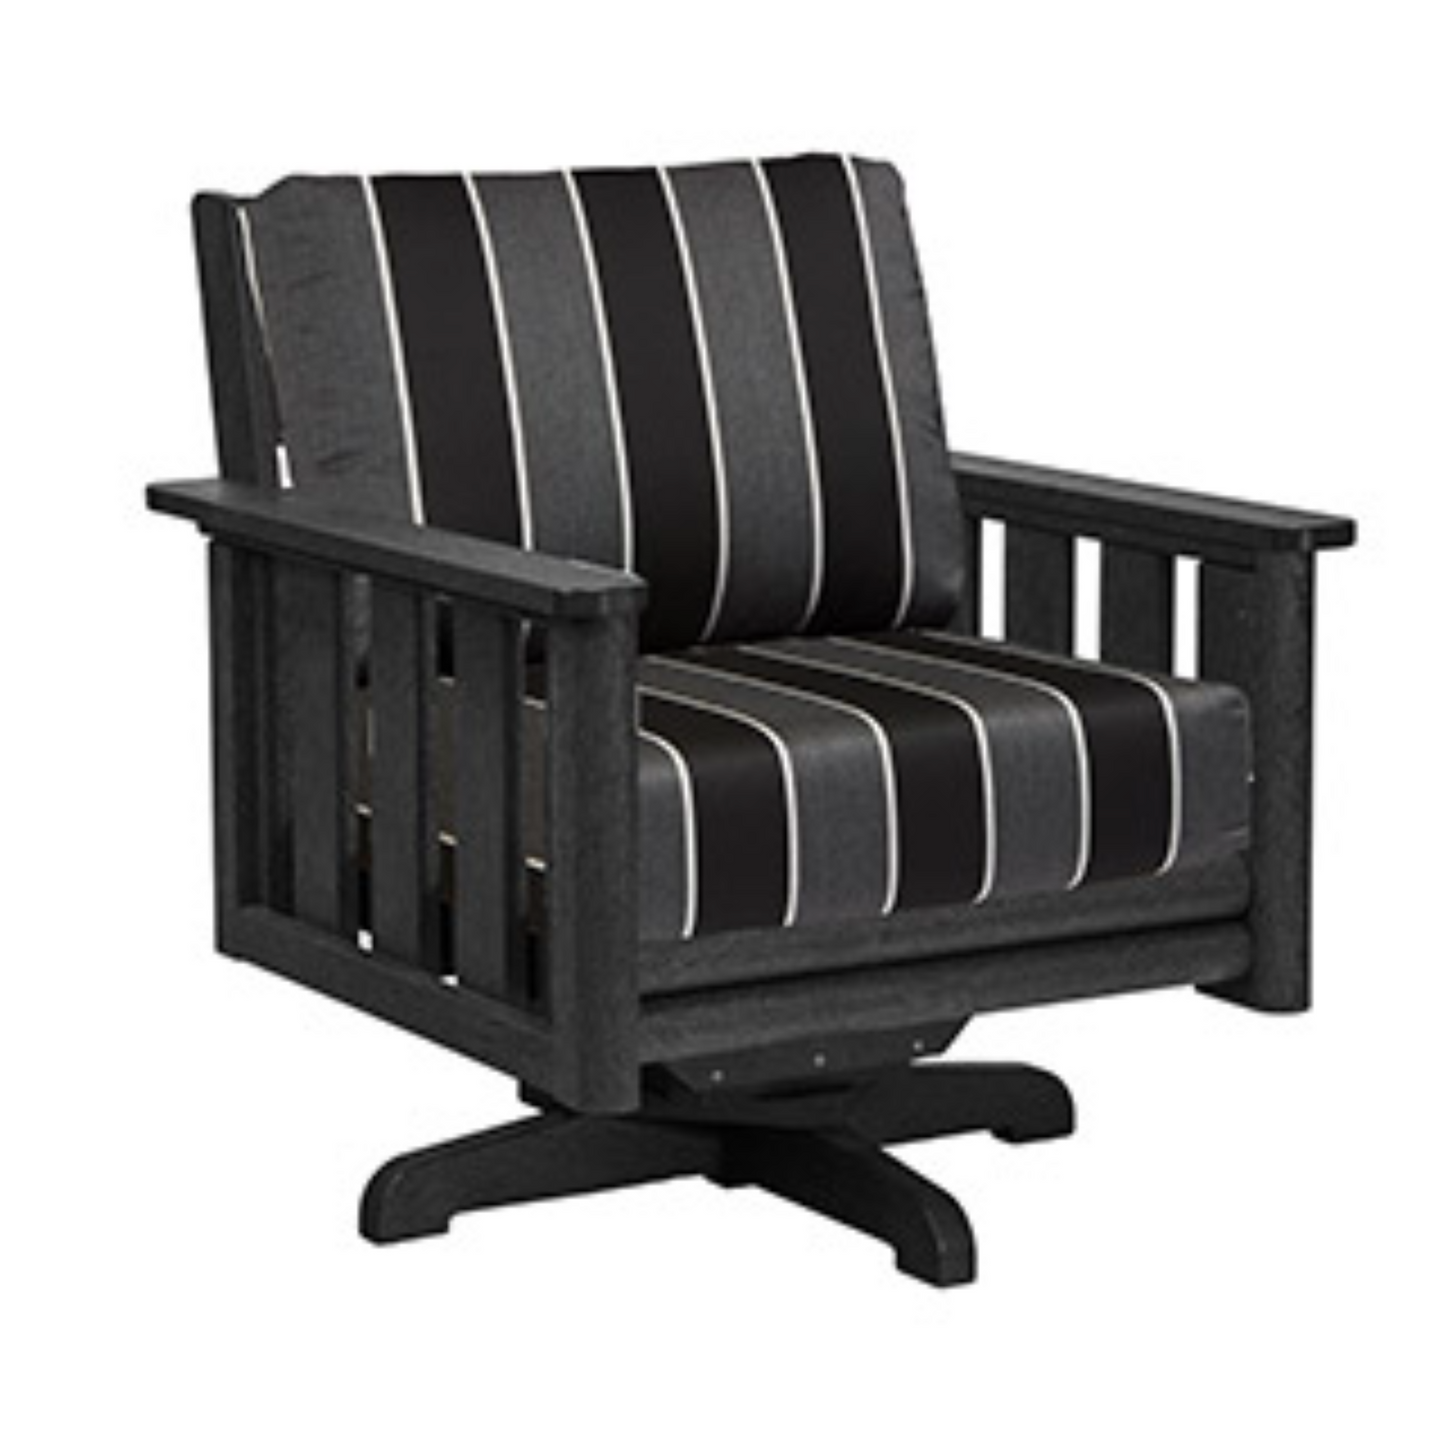 C.R.P. Stratford Swivel Chair in frame colour black and cushion colour peyton granite